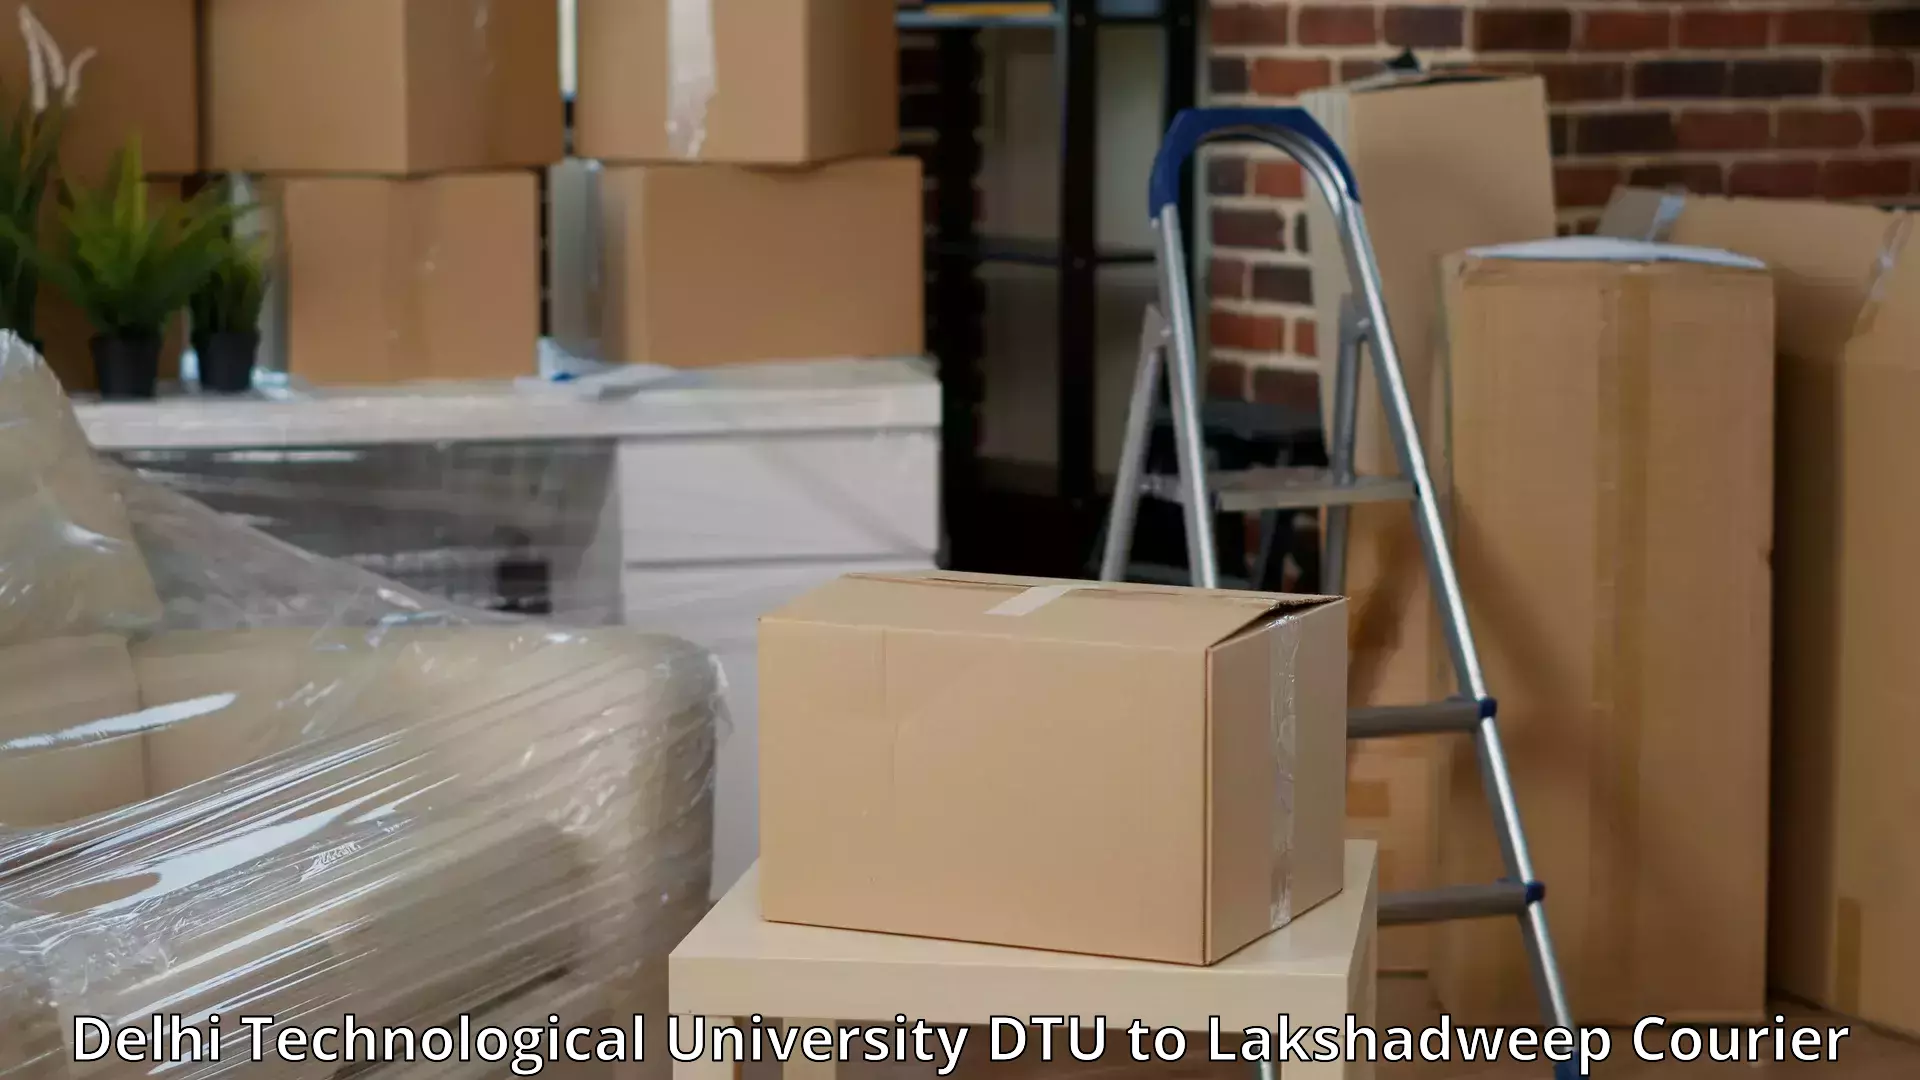 Furniture transport and storage in Delhi Technological University DTU to Lakshadweep